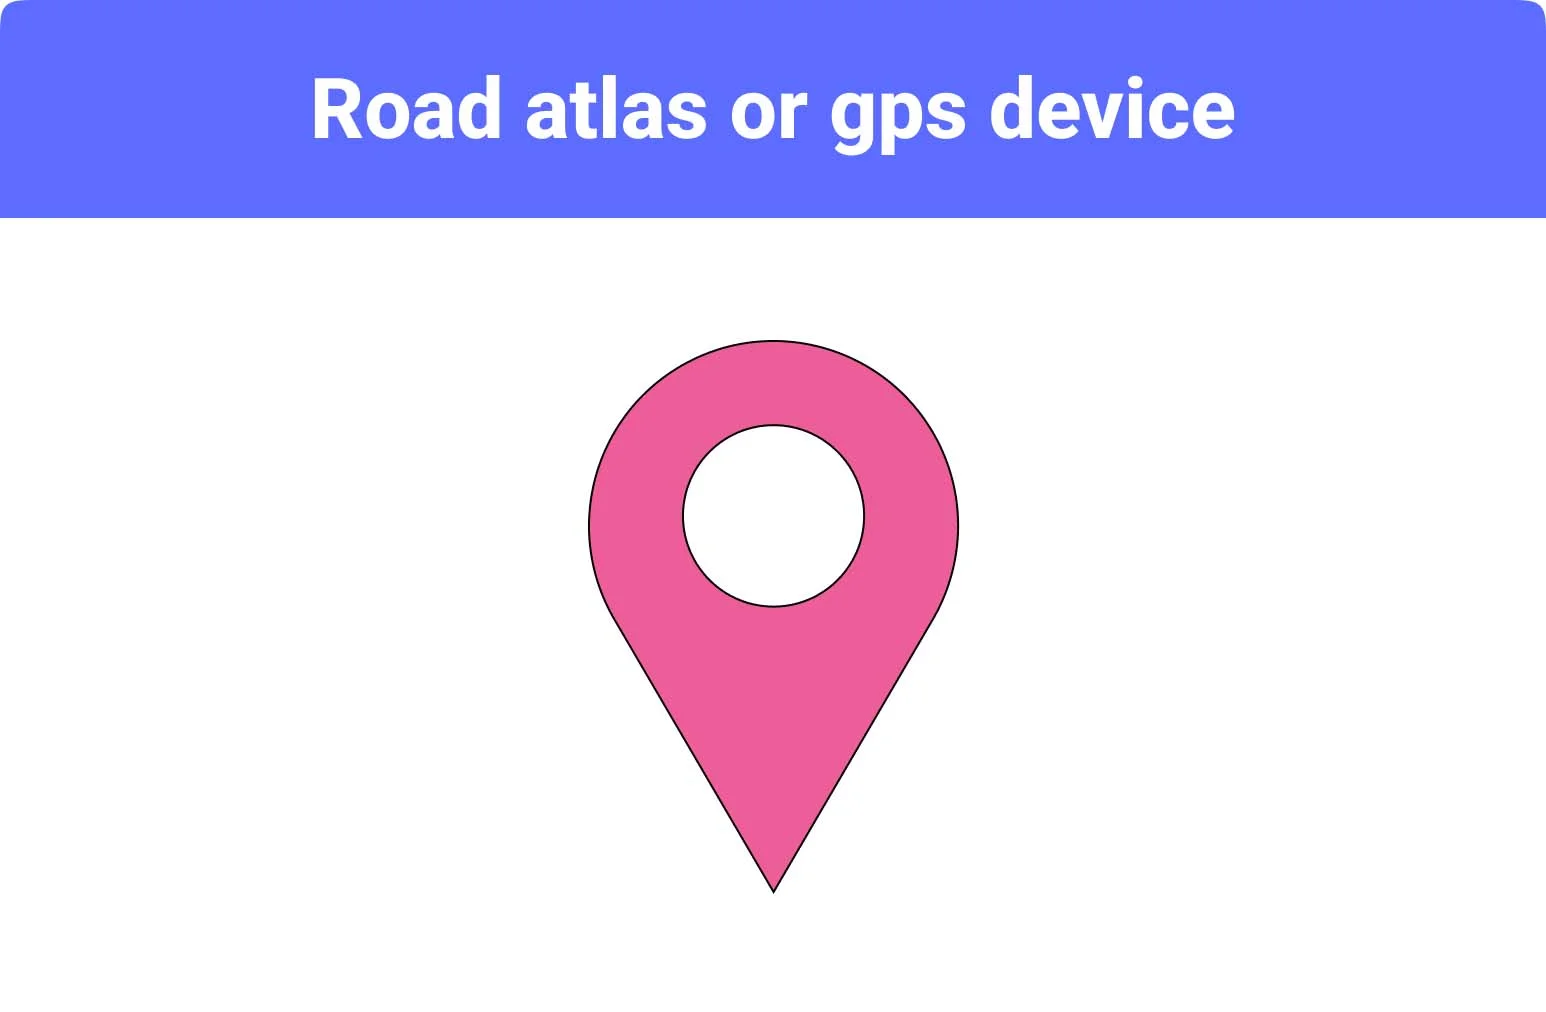 Road atlas or GPS device